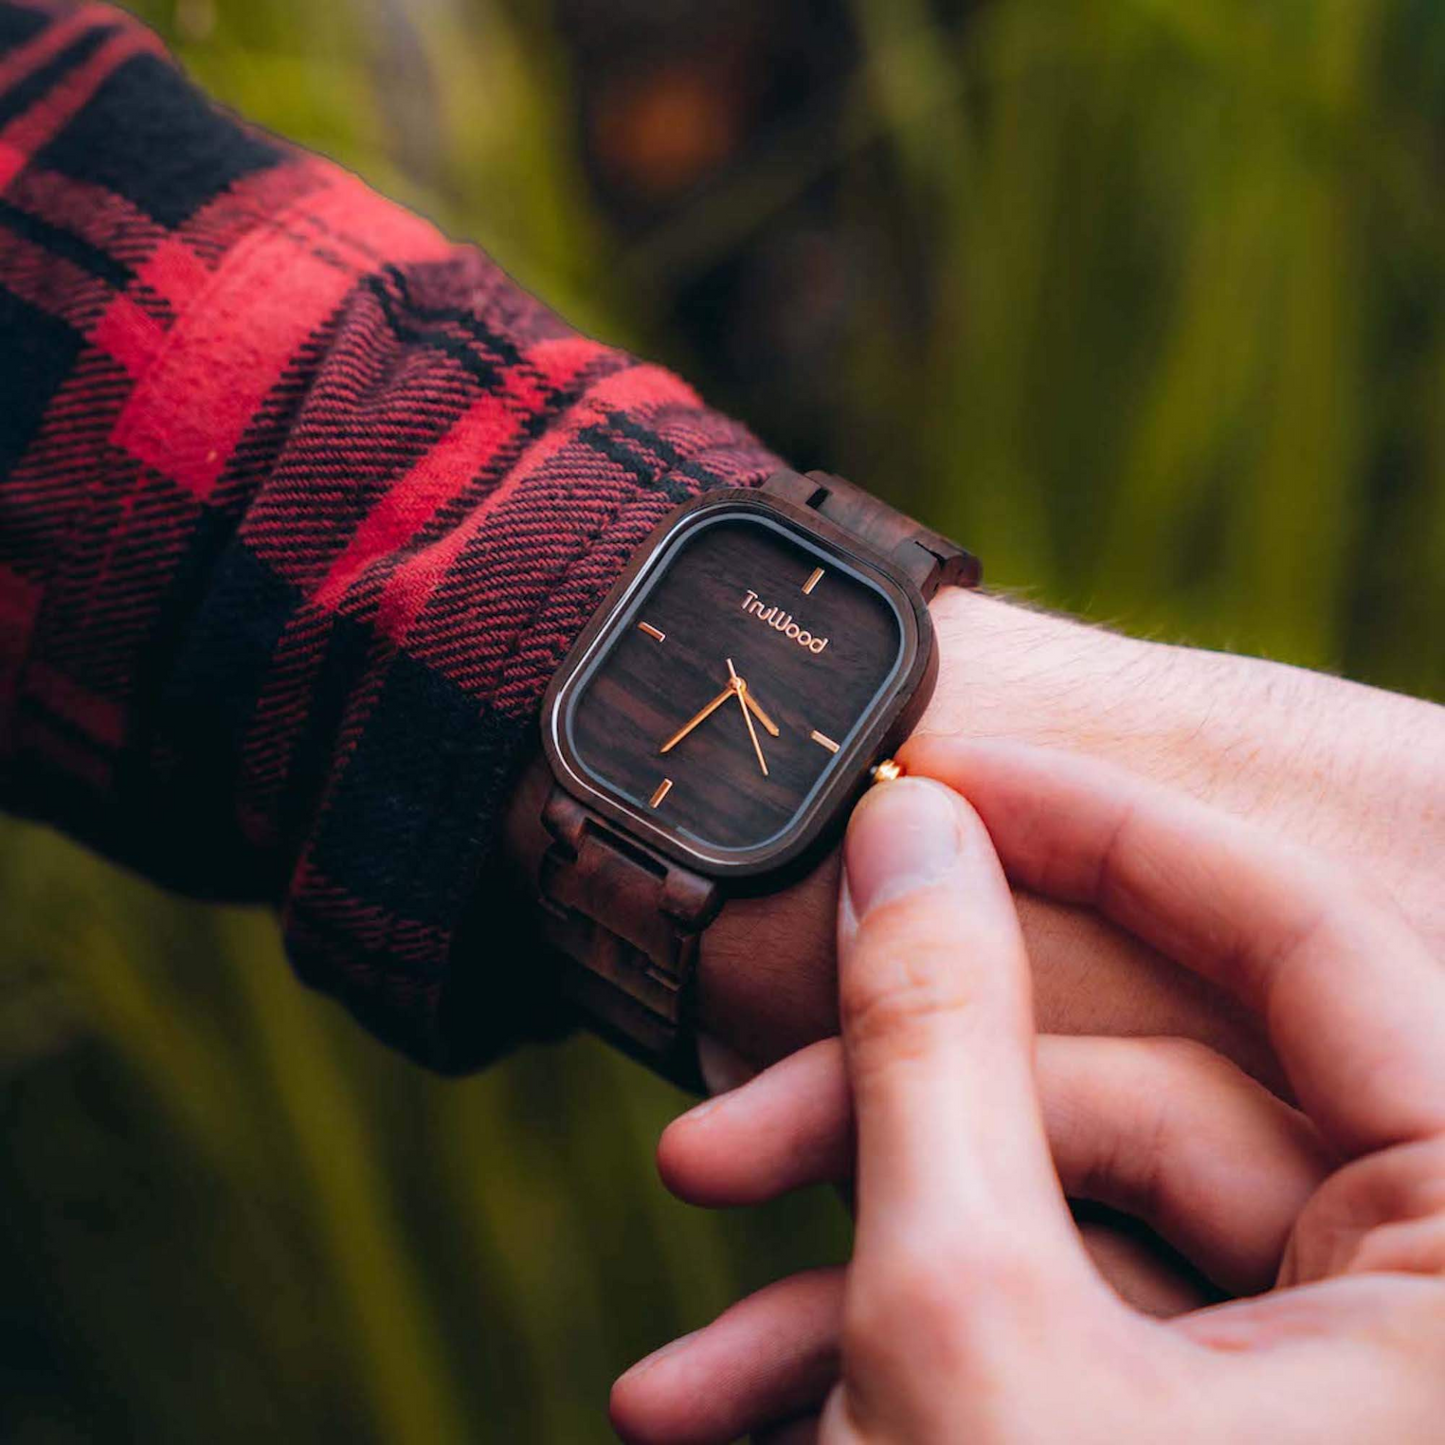 TruWood Carbon Square Wood Watch - Rugged Journeyman's Timepiece, Goodies N Stuff